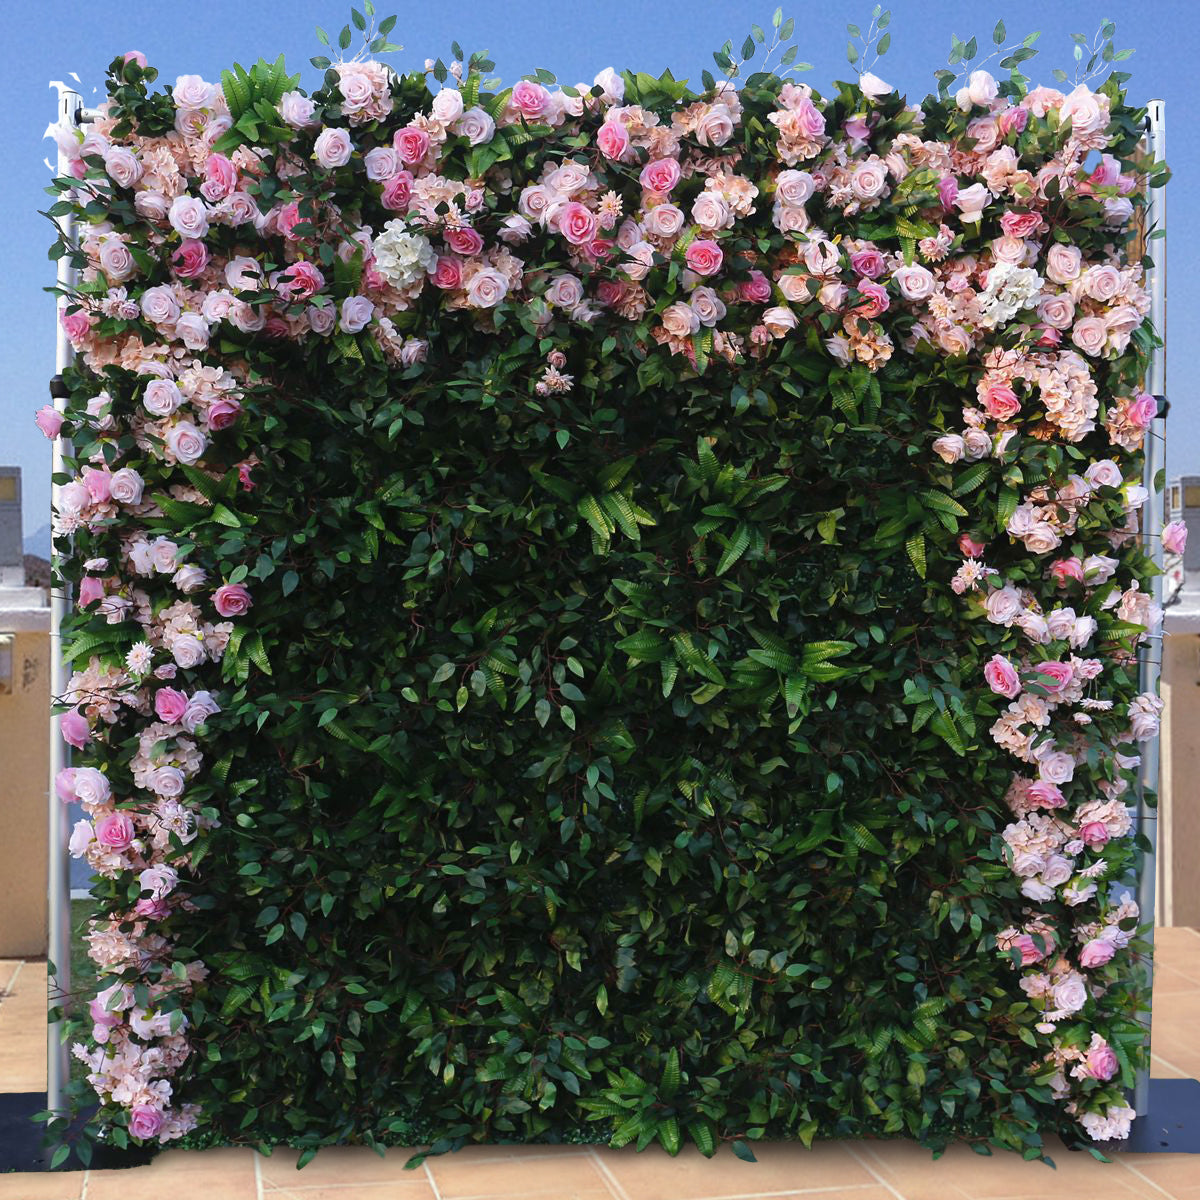 5D Artificial Flower Wall Arrangement Wedding Party Birthday Backdrop Decor HQ9022